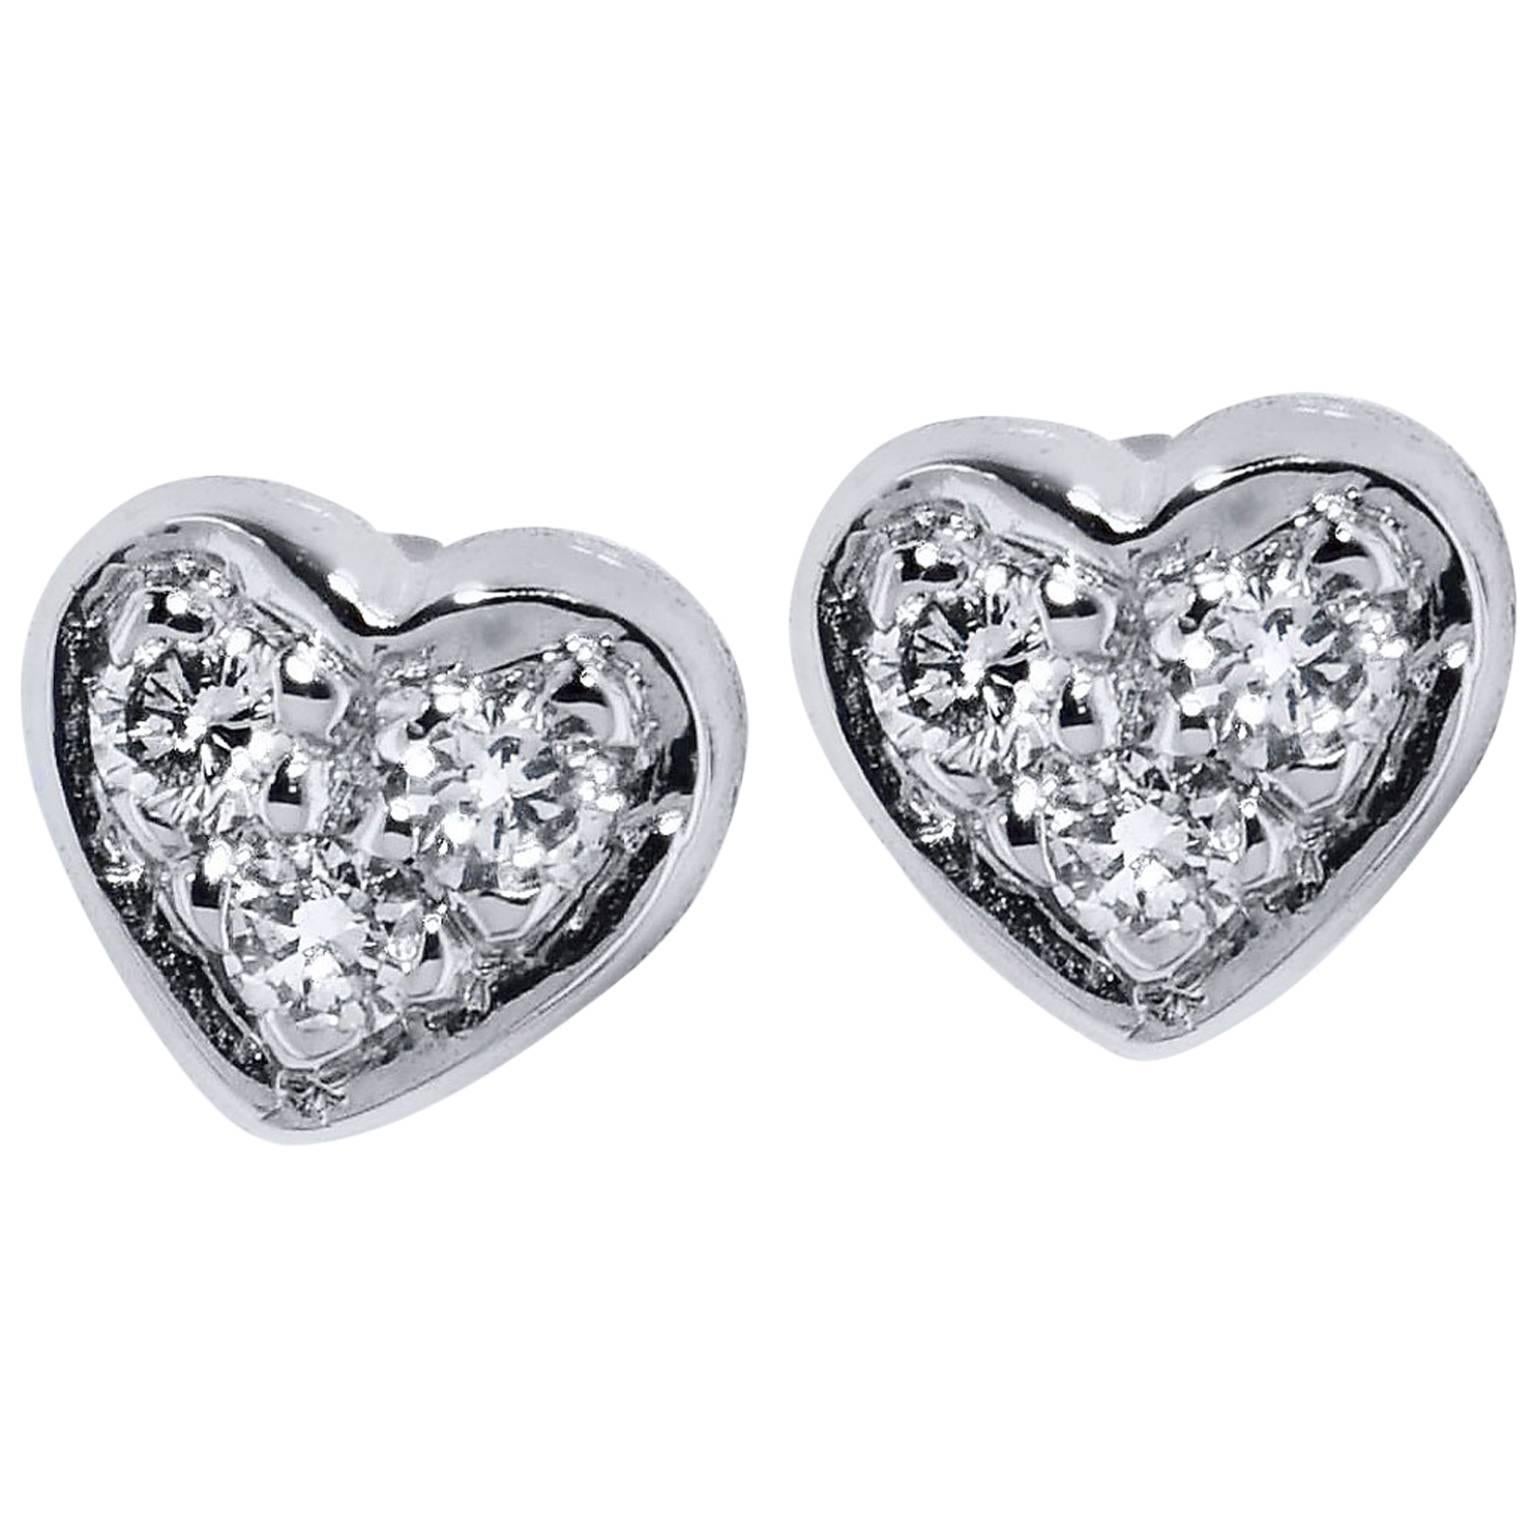 H & H 0.05 Carat Diamond Heart Stud Earrings